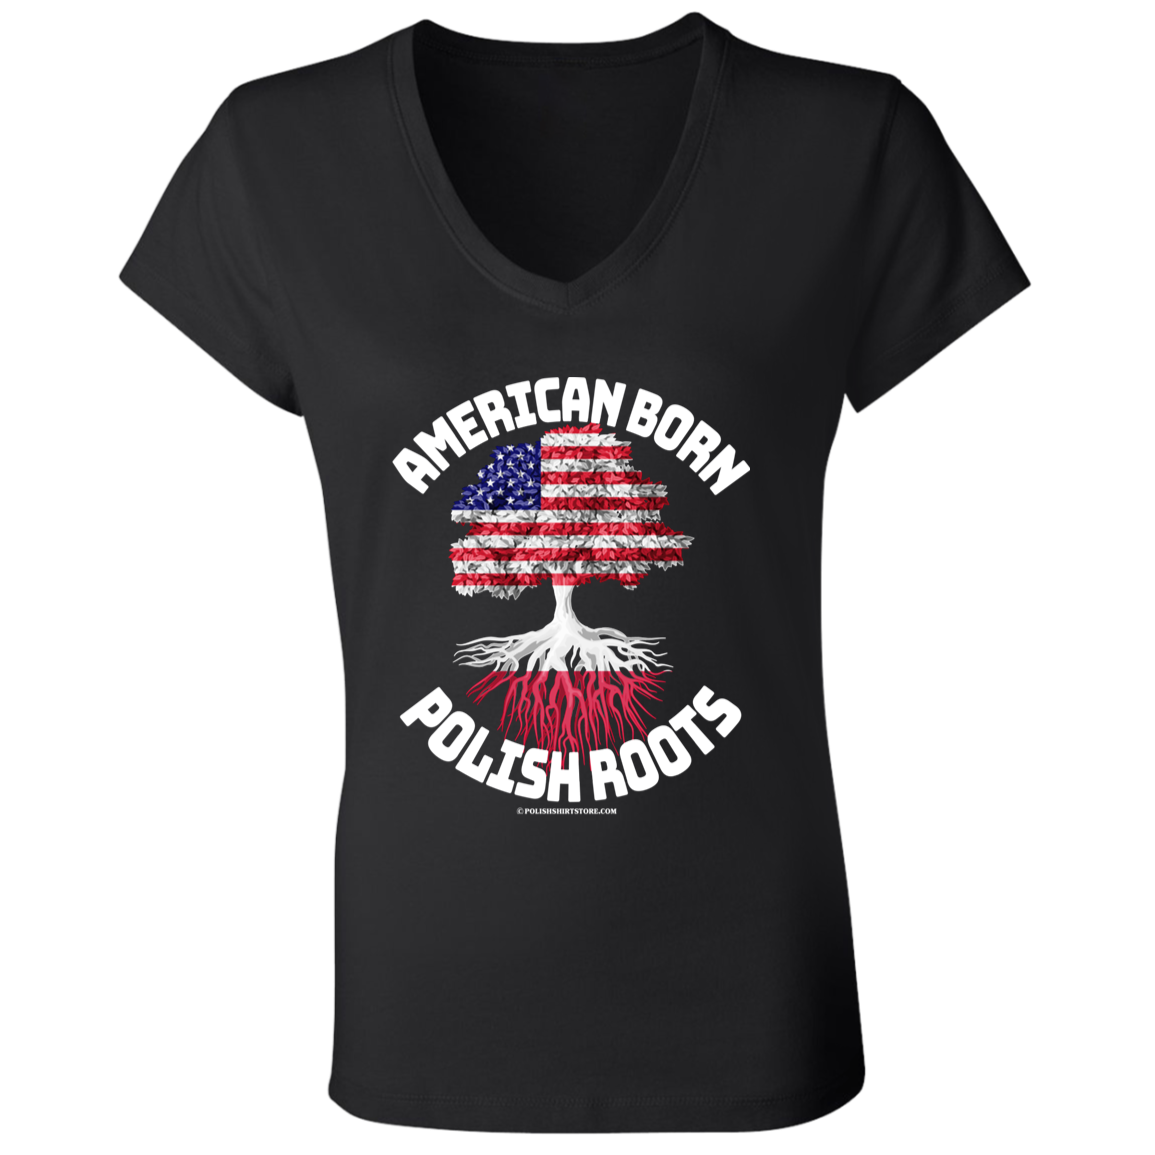 American Born Polish Roots Apparel CustomCat B6005 Ladies' Jersey V-Neck T-Shirt Black S